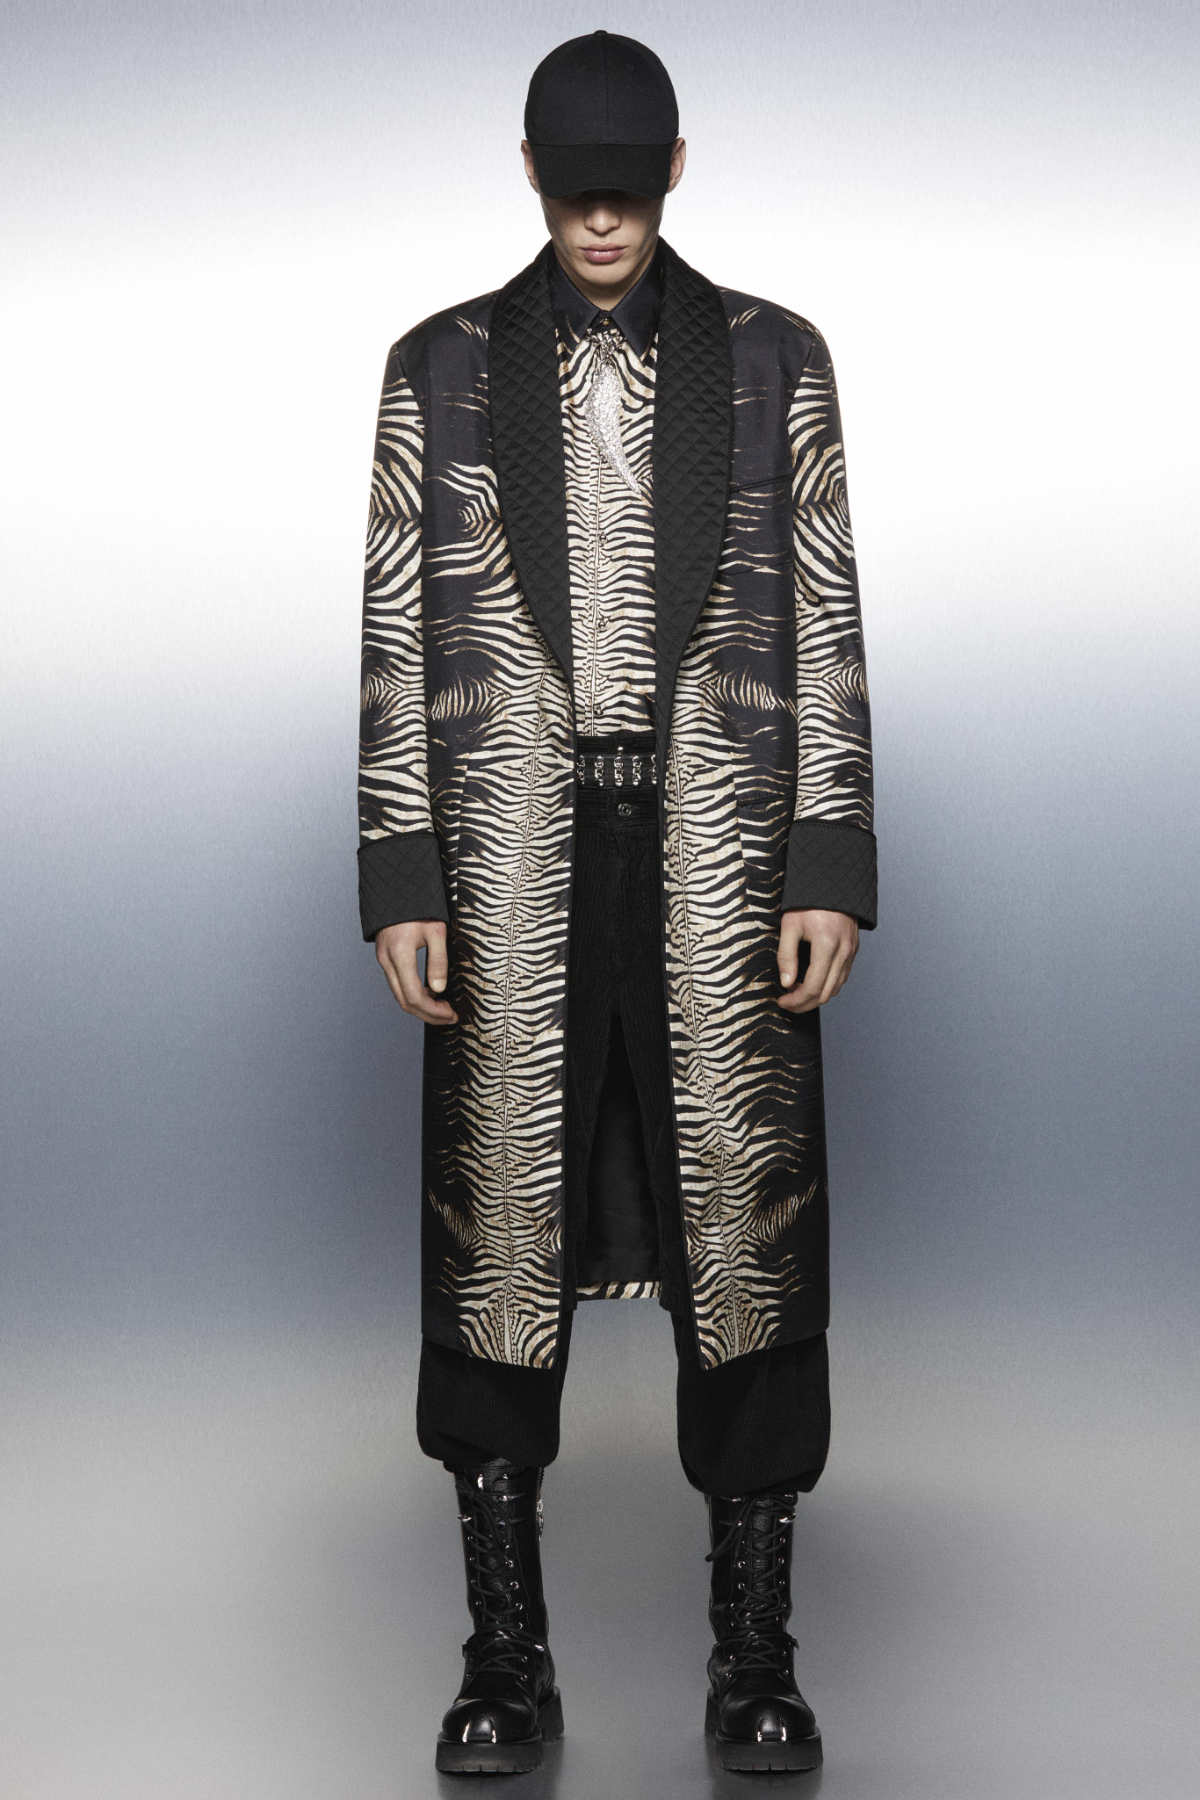 Roberto Cavalli Presents Its New Men’s Fall/Winter 2022-23 Collection